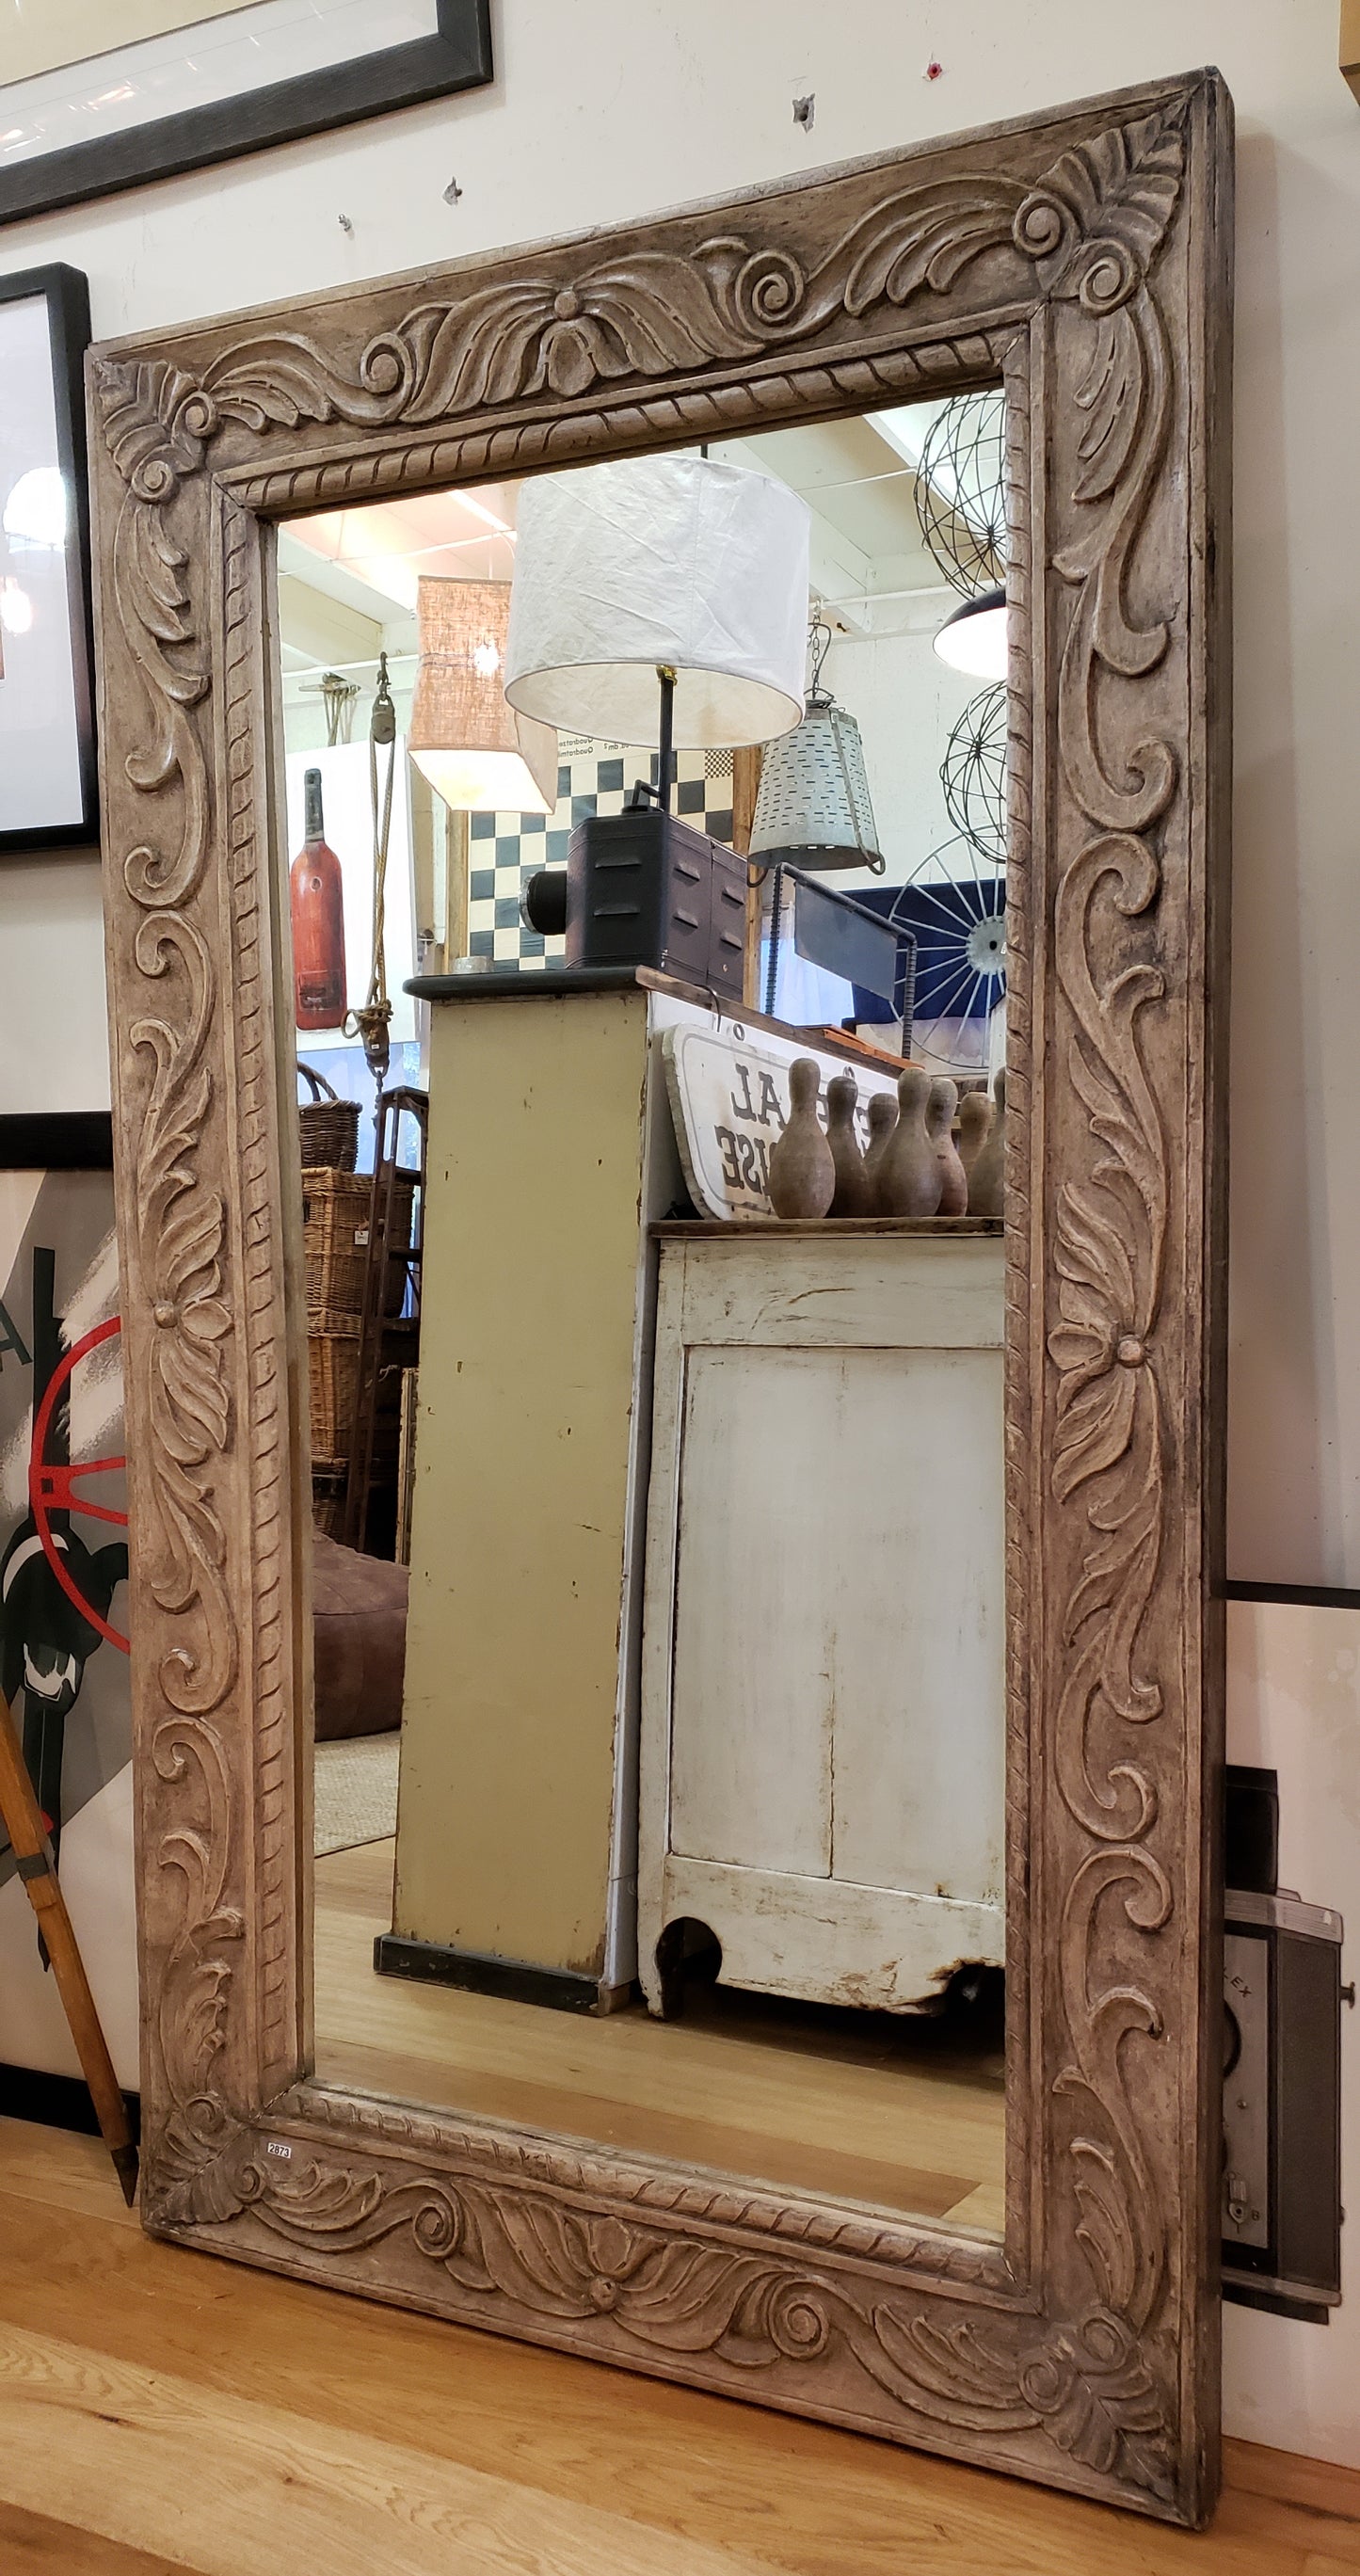 Single Rectangle Pane Wooden Mirror